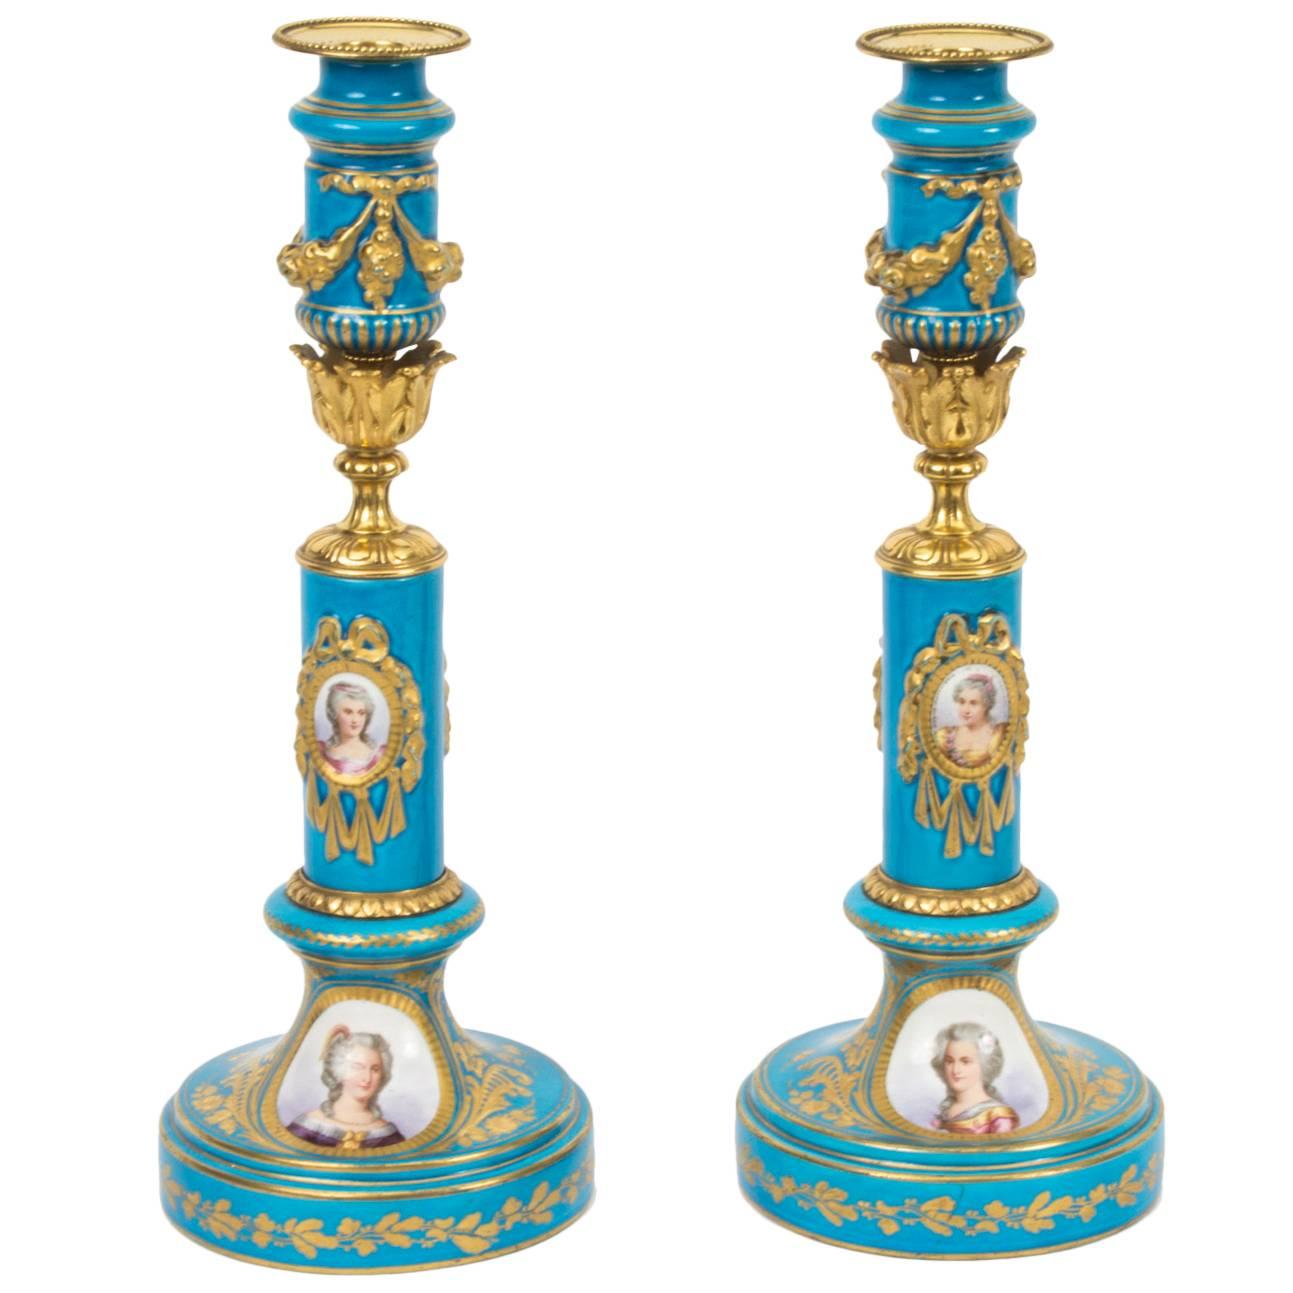 Antique Pair of Sevres Porcelain and Ormolu Candlesticks, circa 1880